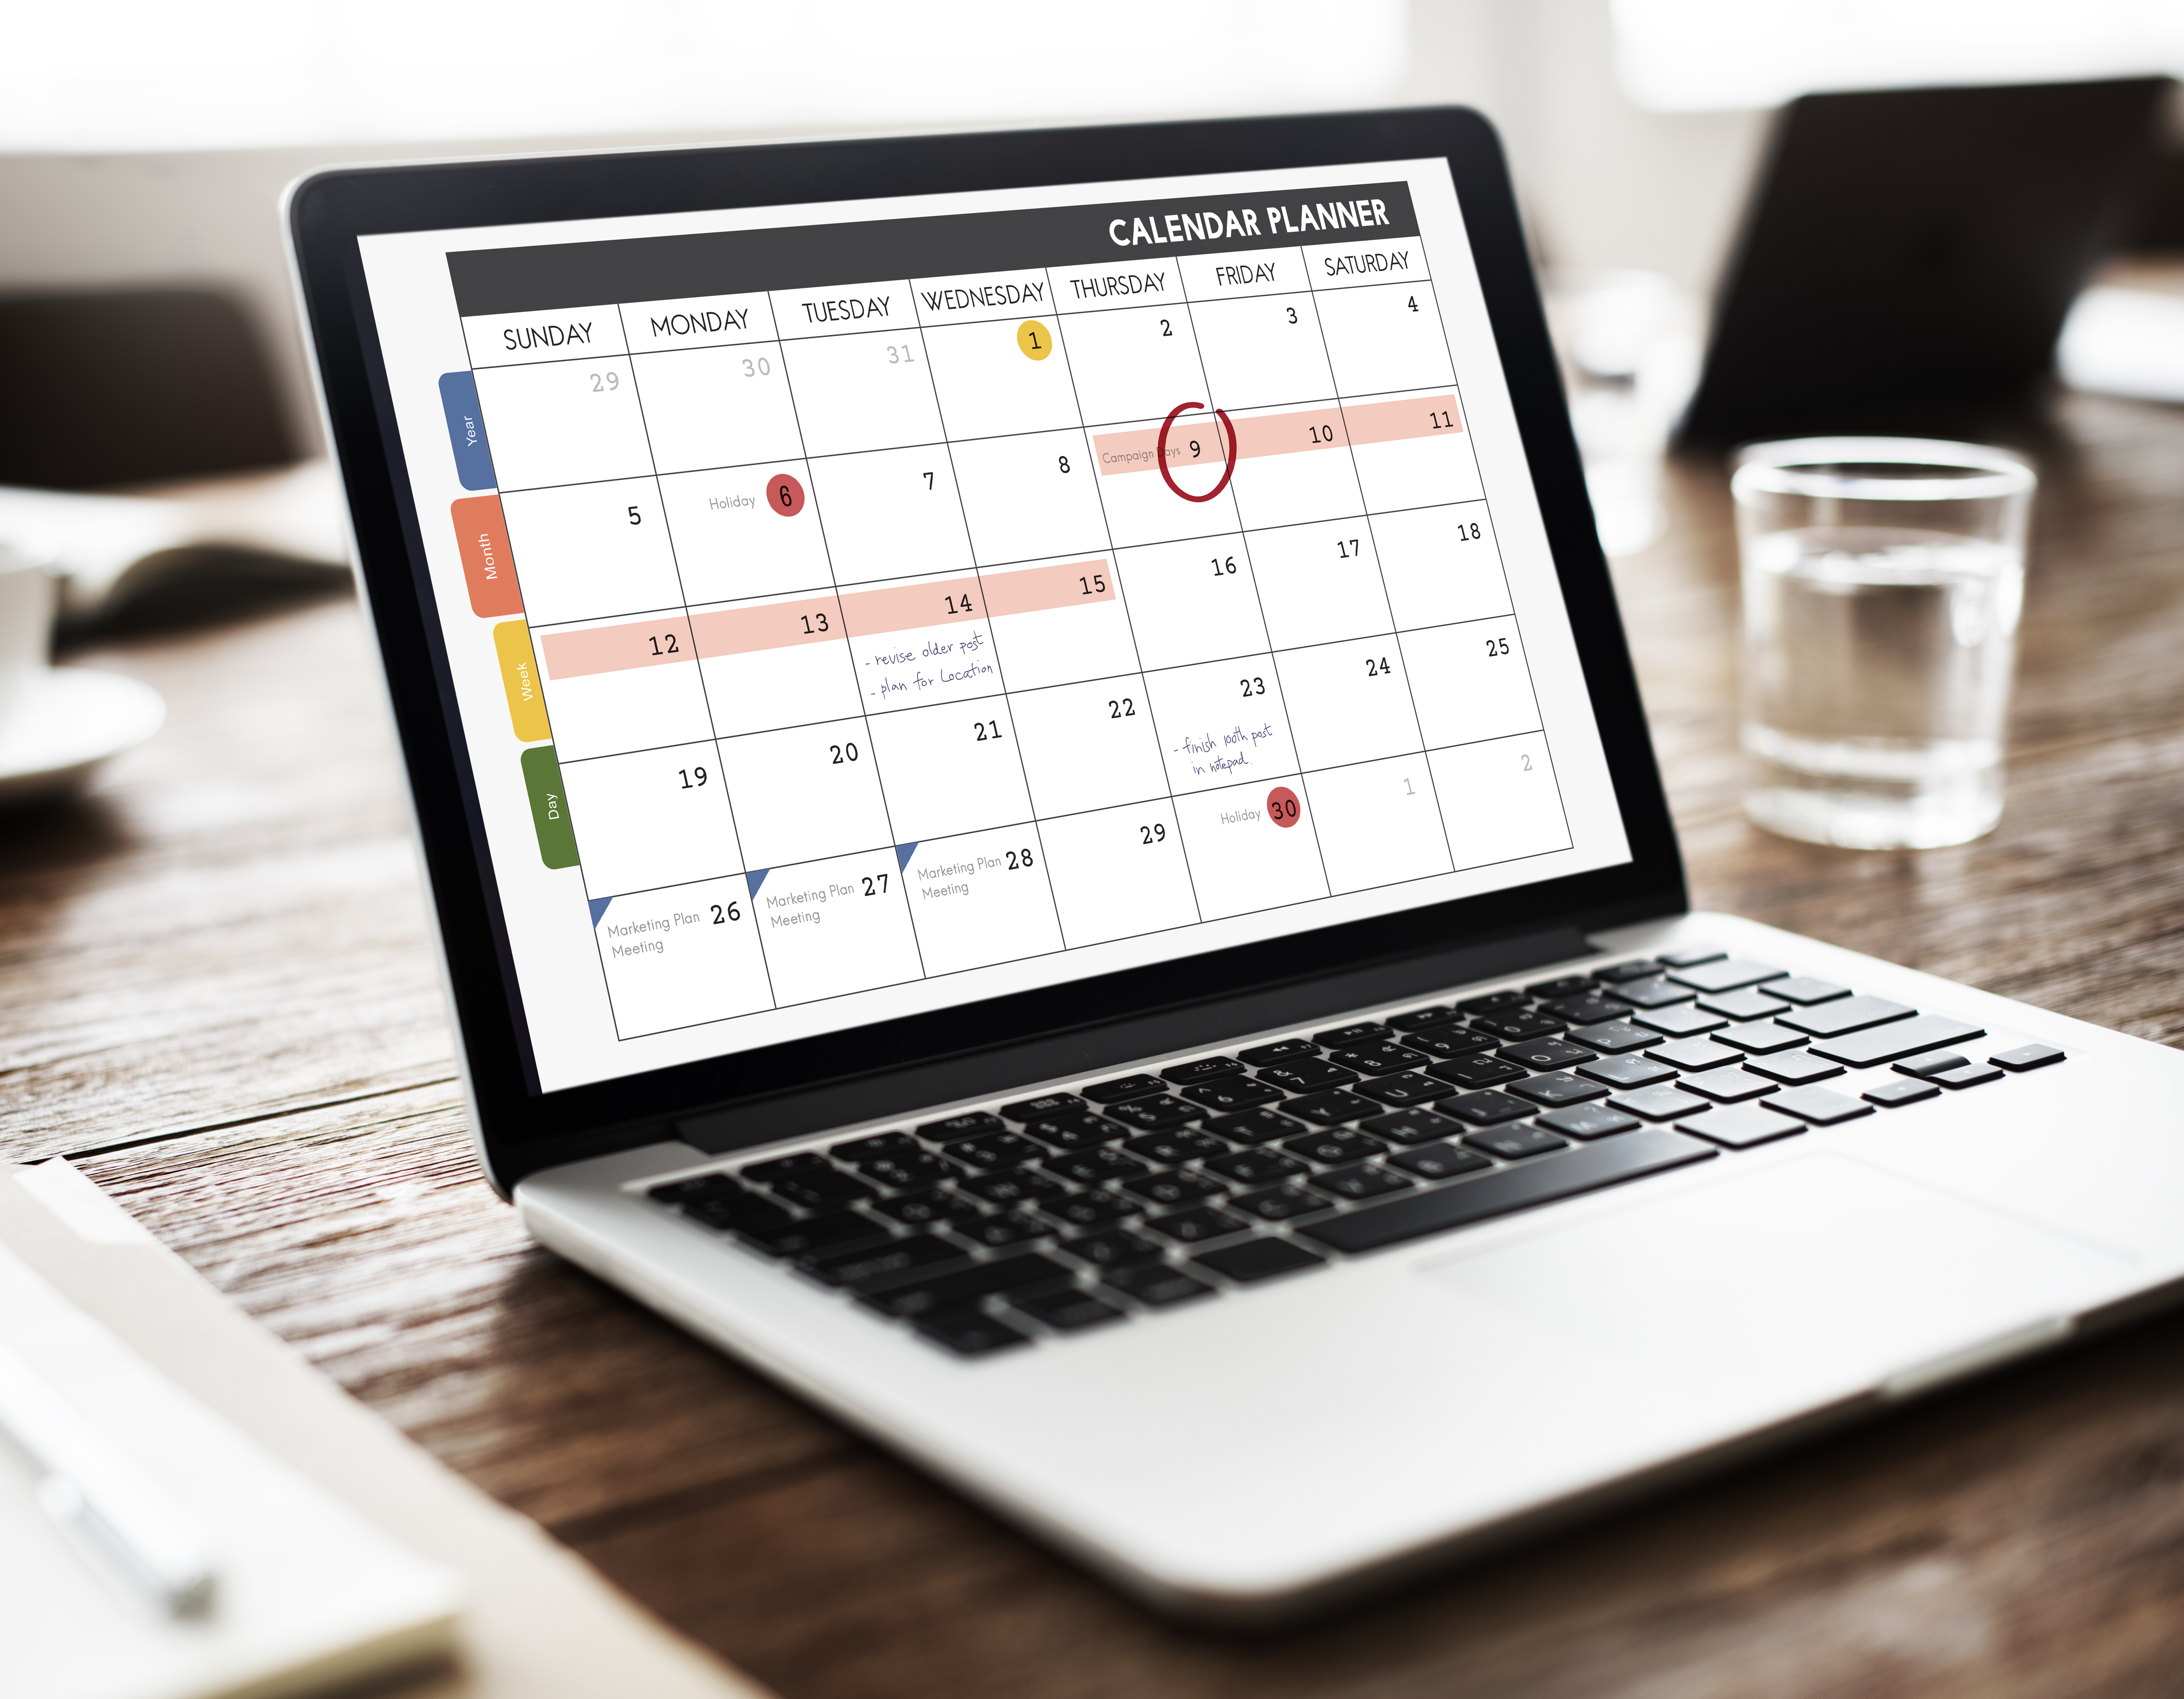 calendar-planner-organization-management-remind-concept